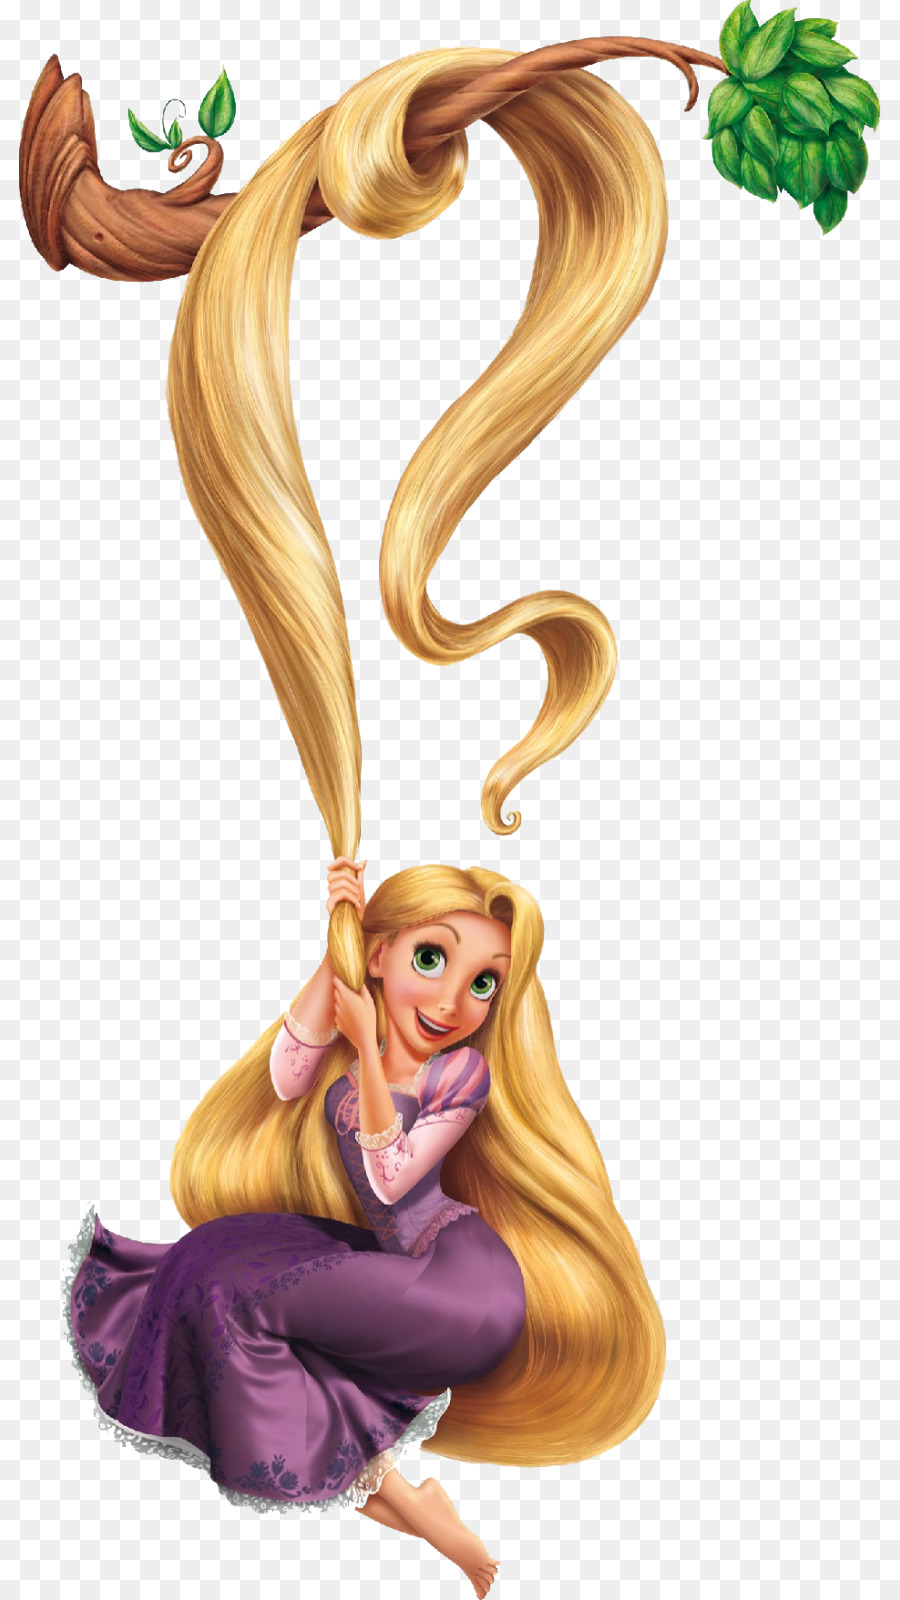 Tangled Rapunzel Flynn Rider Gothel Ariel - Disney Princess png download - 862*1600 - Free Transparent Tangled png Download.